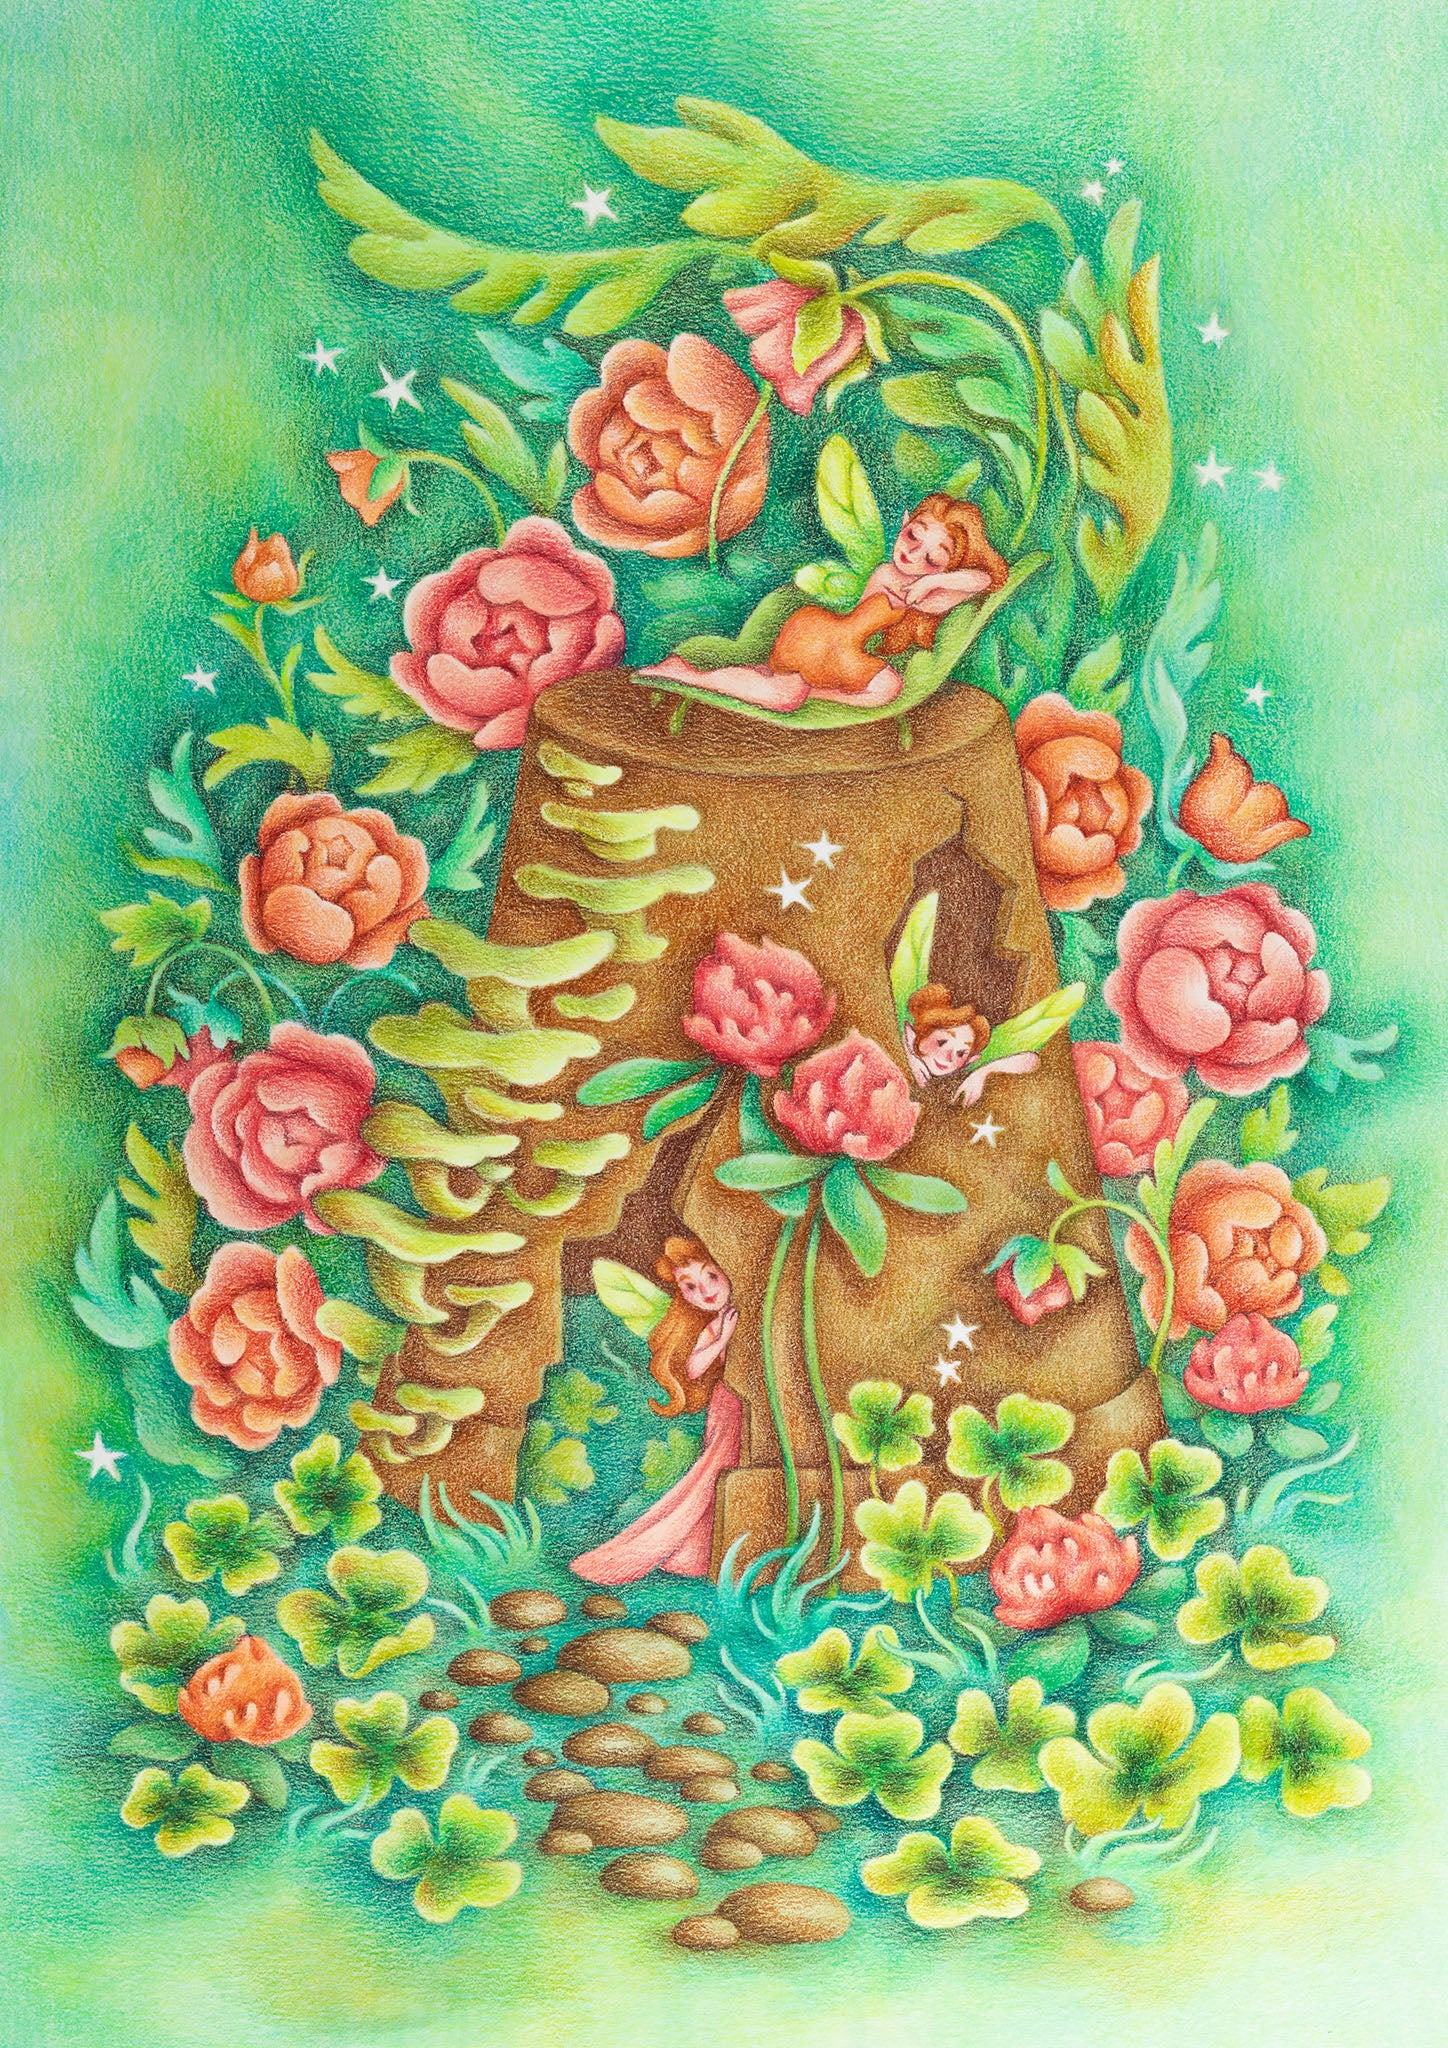 Flowerpot Faeries - Original Illustration